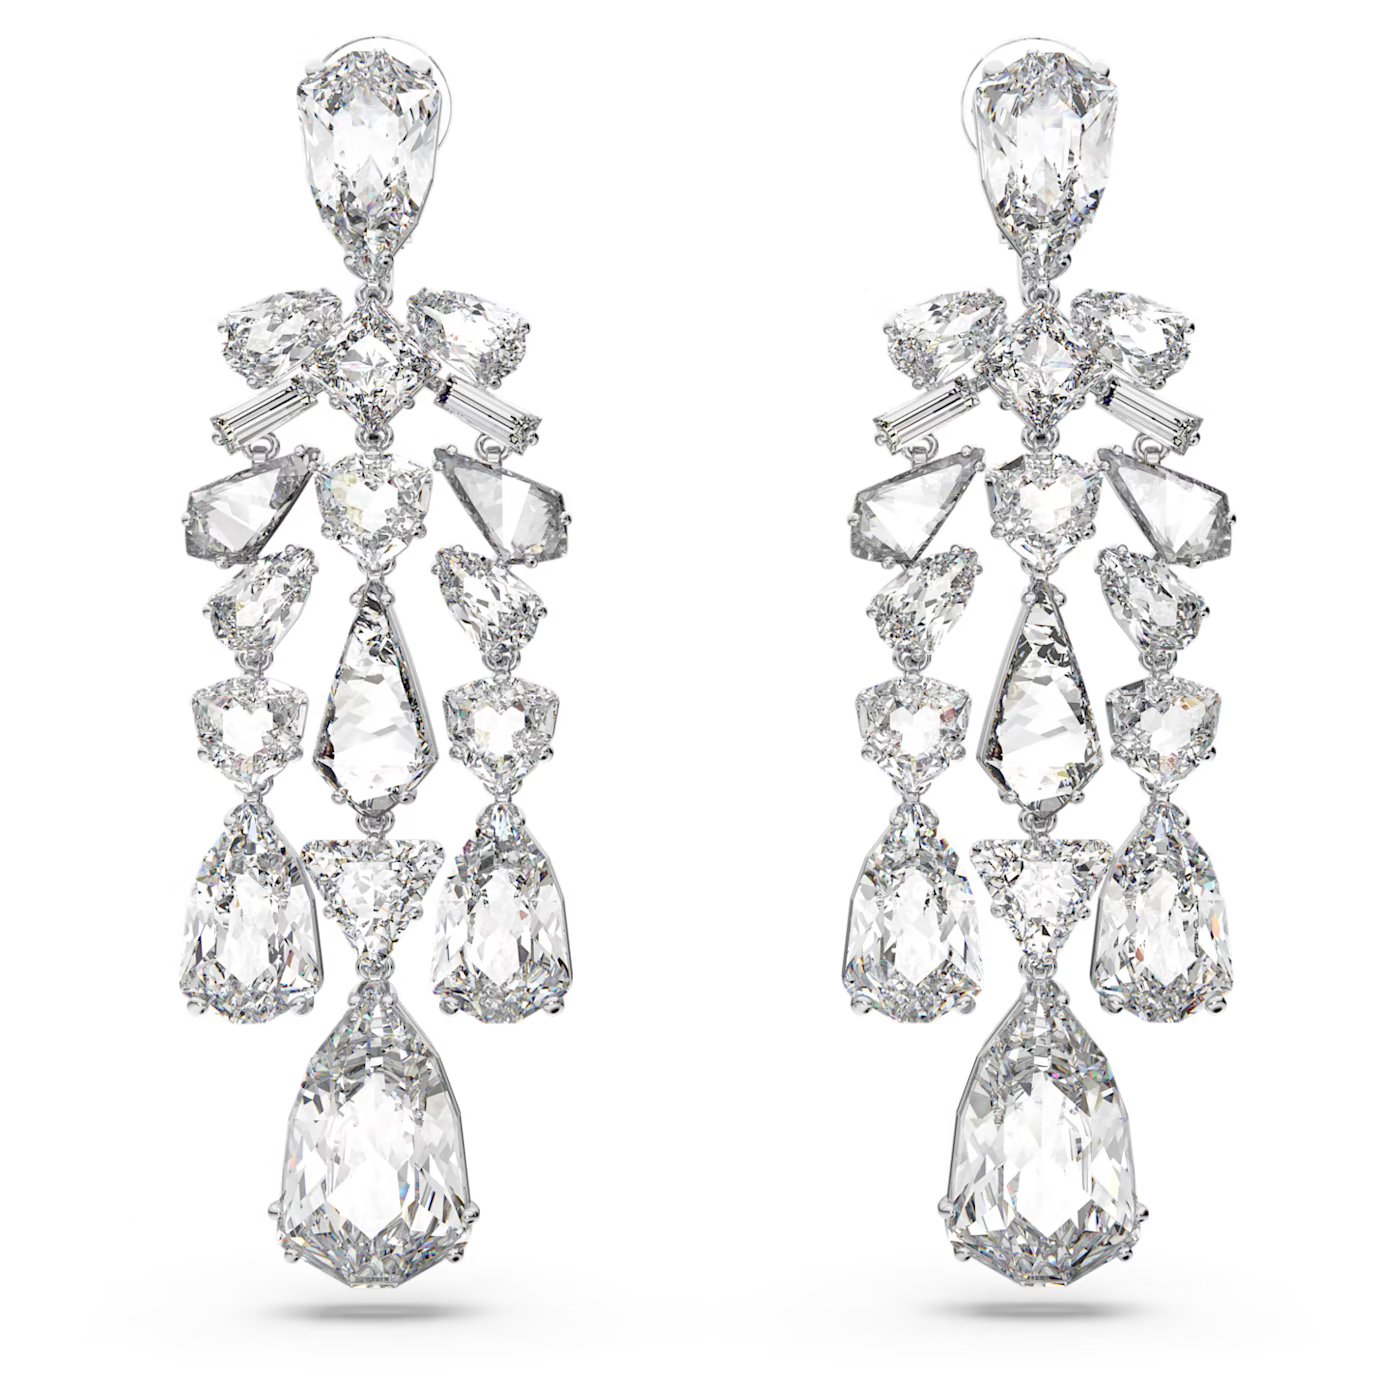 6491c4b8bab0d_mesmera-clip-earrings--mixed-cuts--chandelier--white--rhodium-plated-swarovski-5661691.jpg